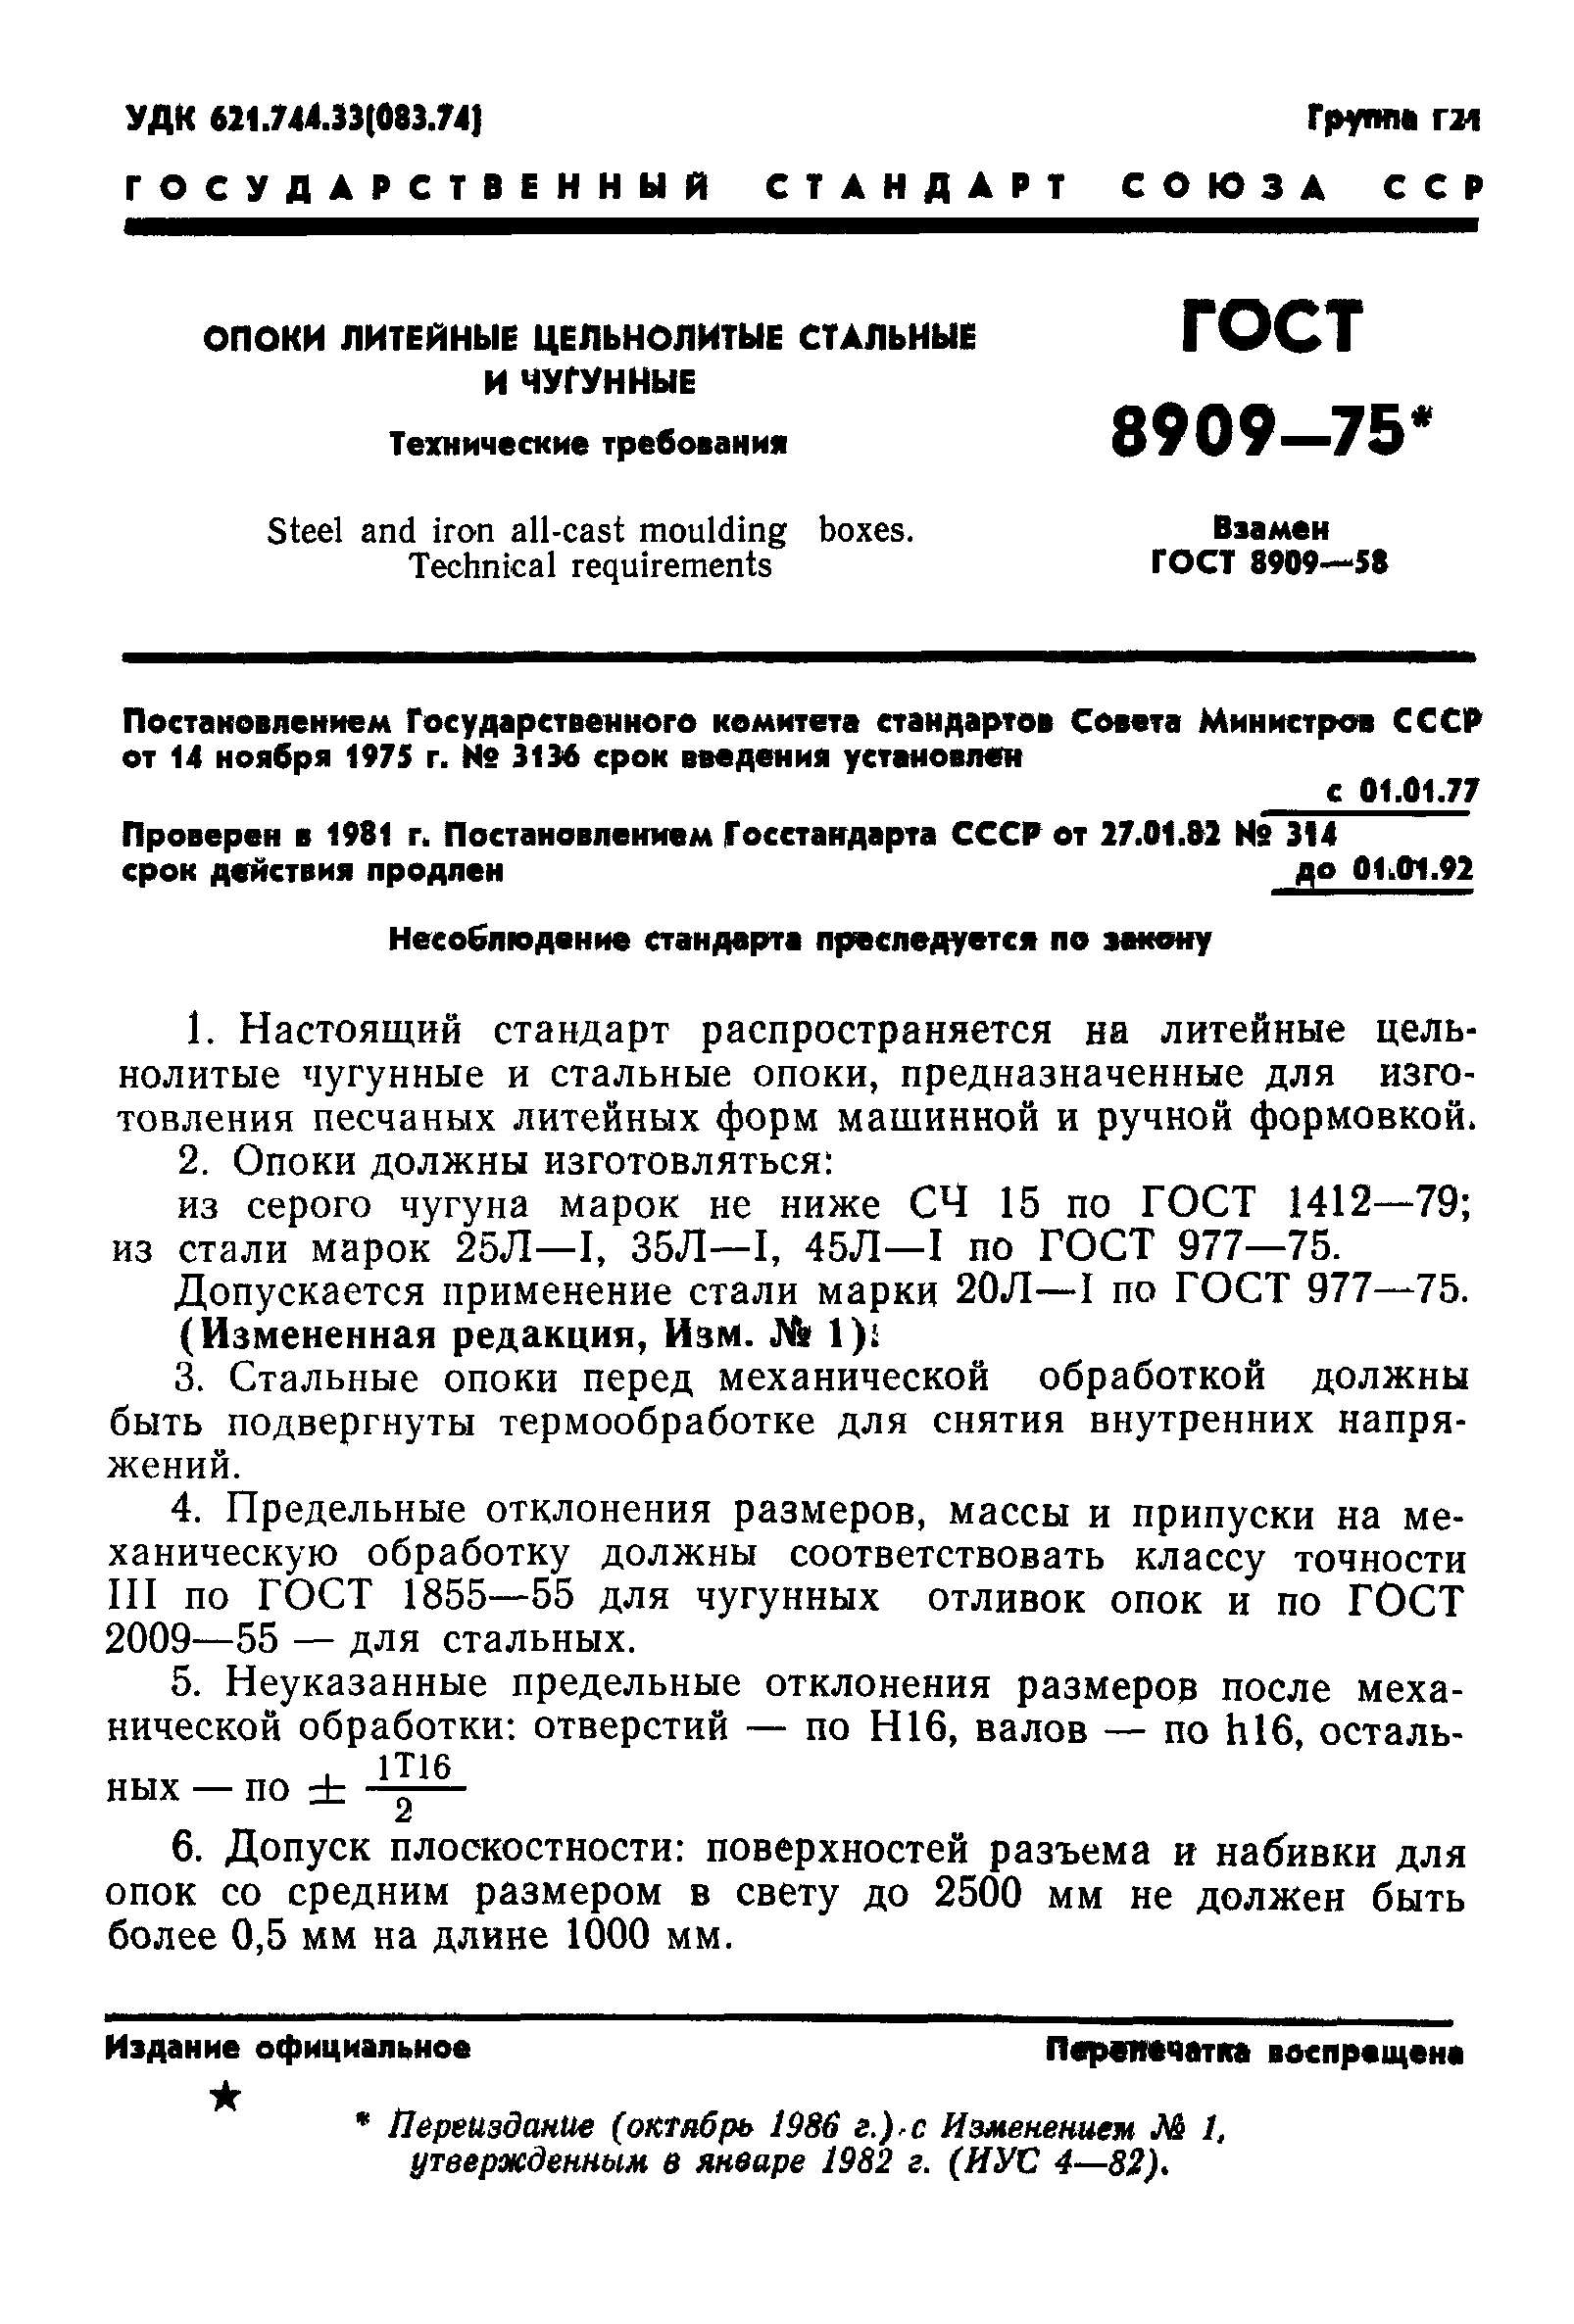 ГОСТ 8909-75